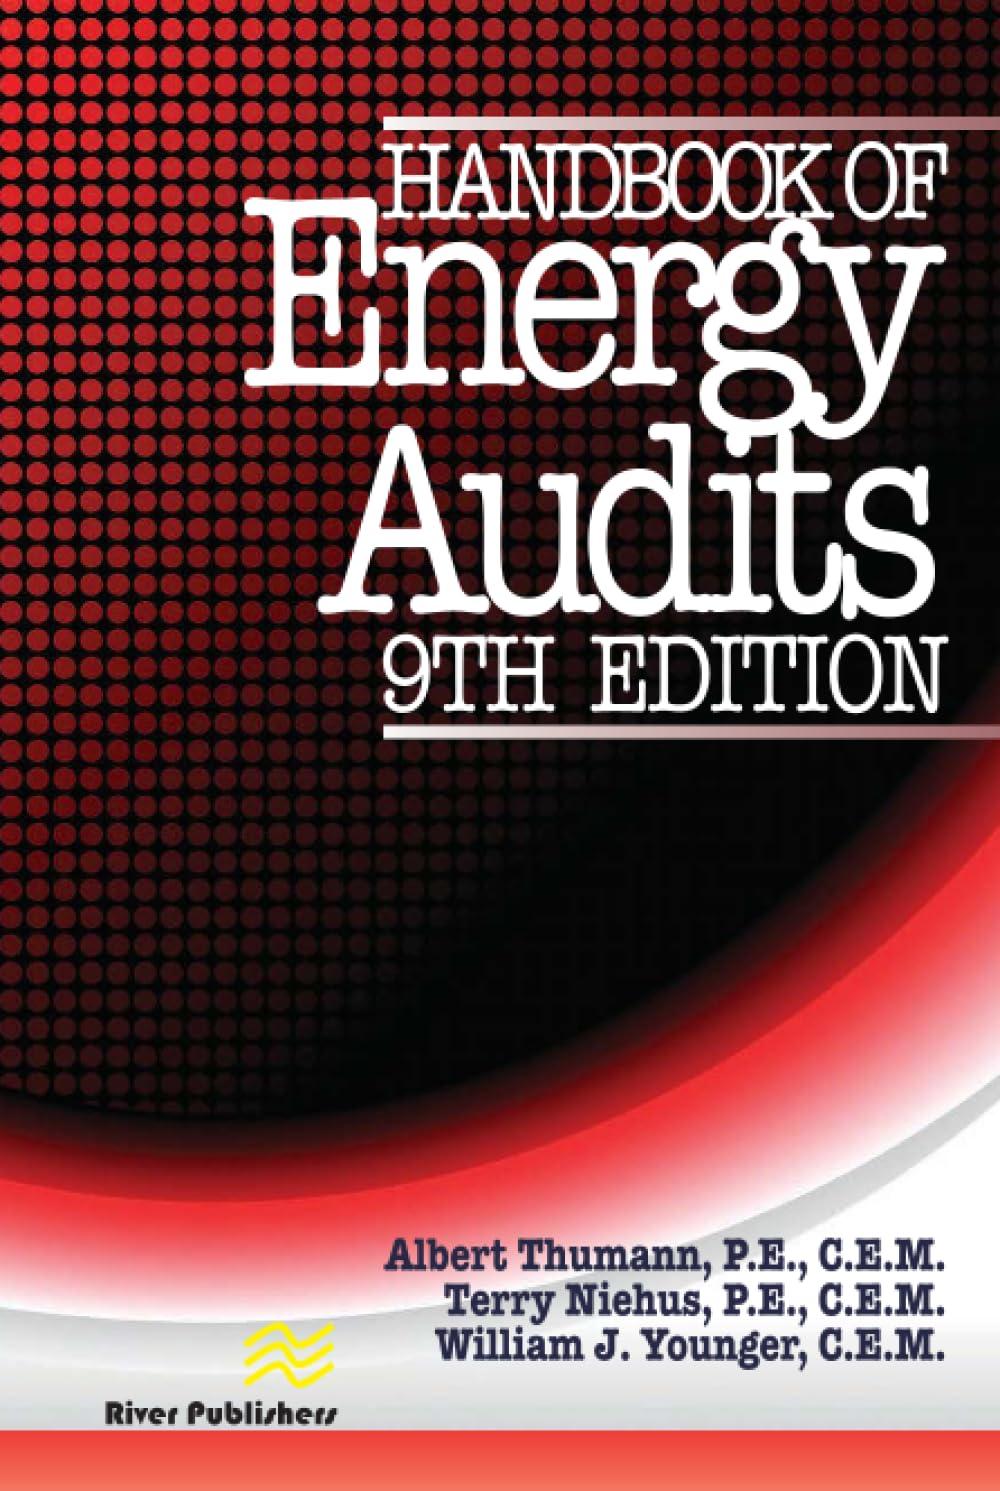 handbook of energy audits 9th edition albert thumann, terry niehus, william j. younger 1466561629,